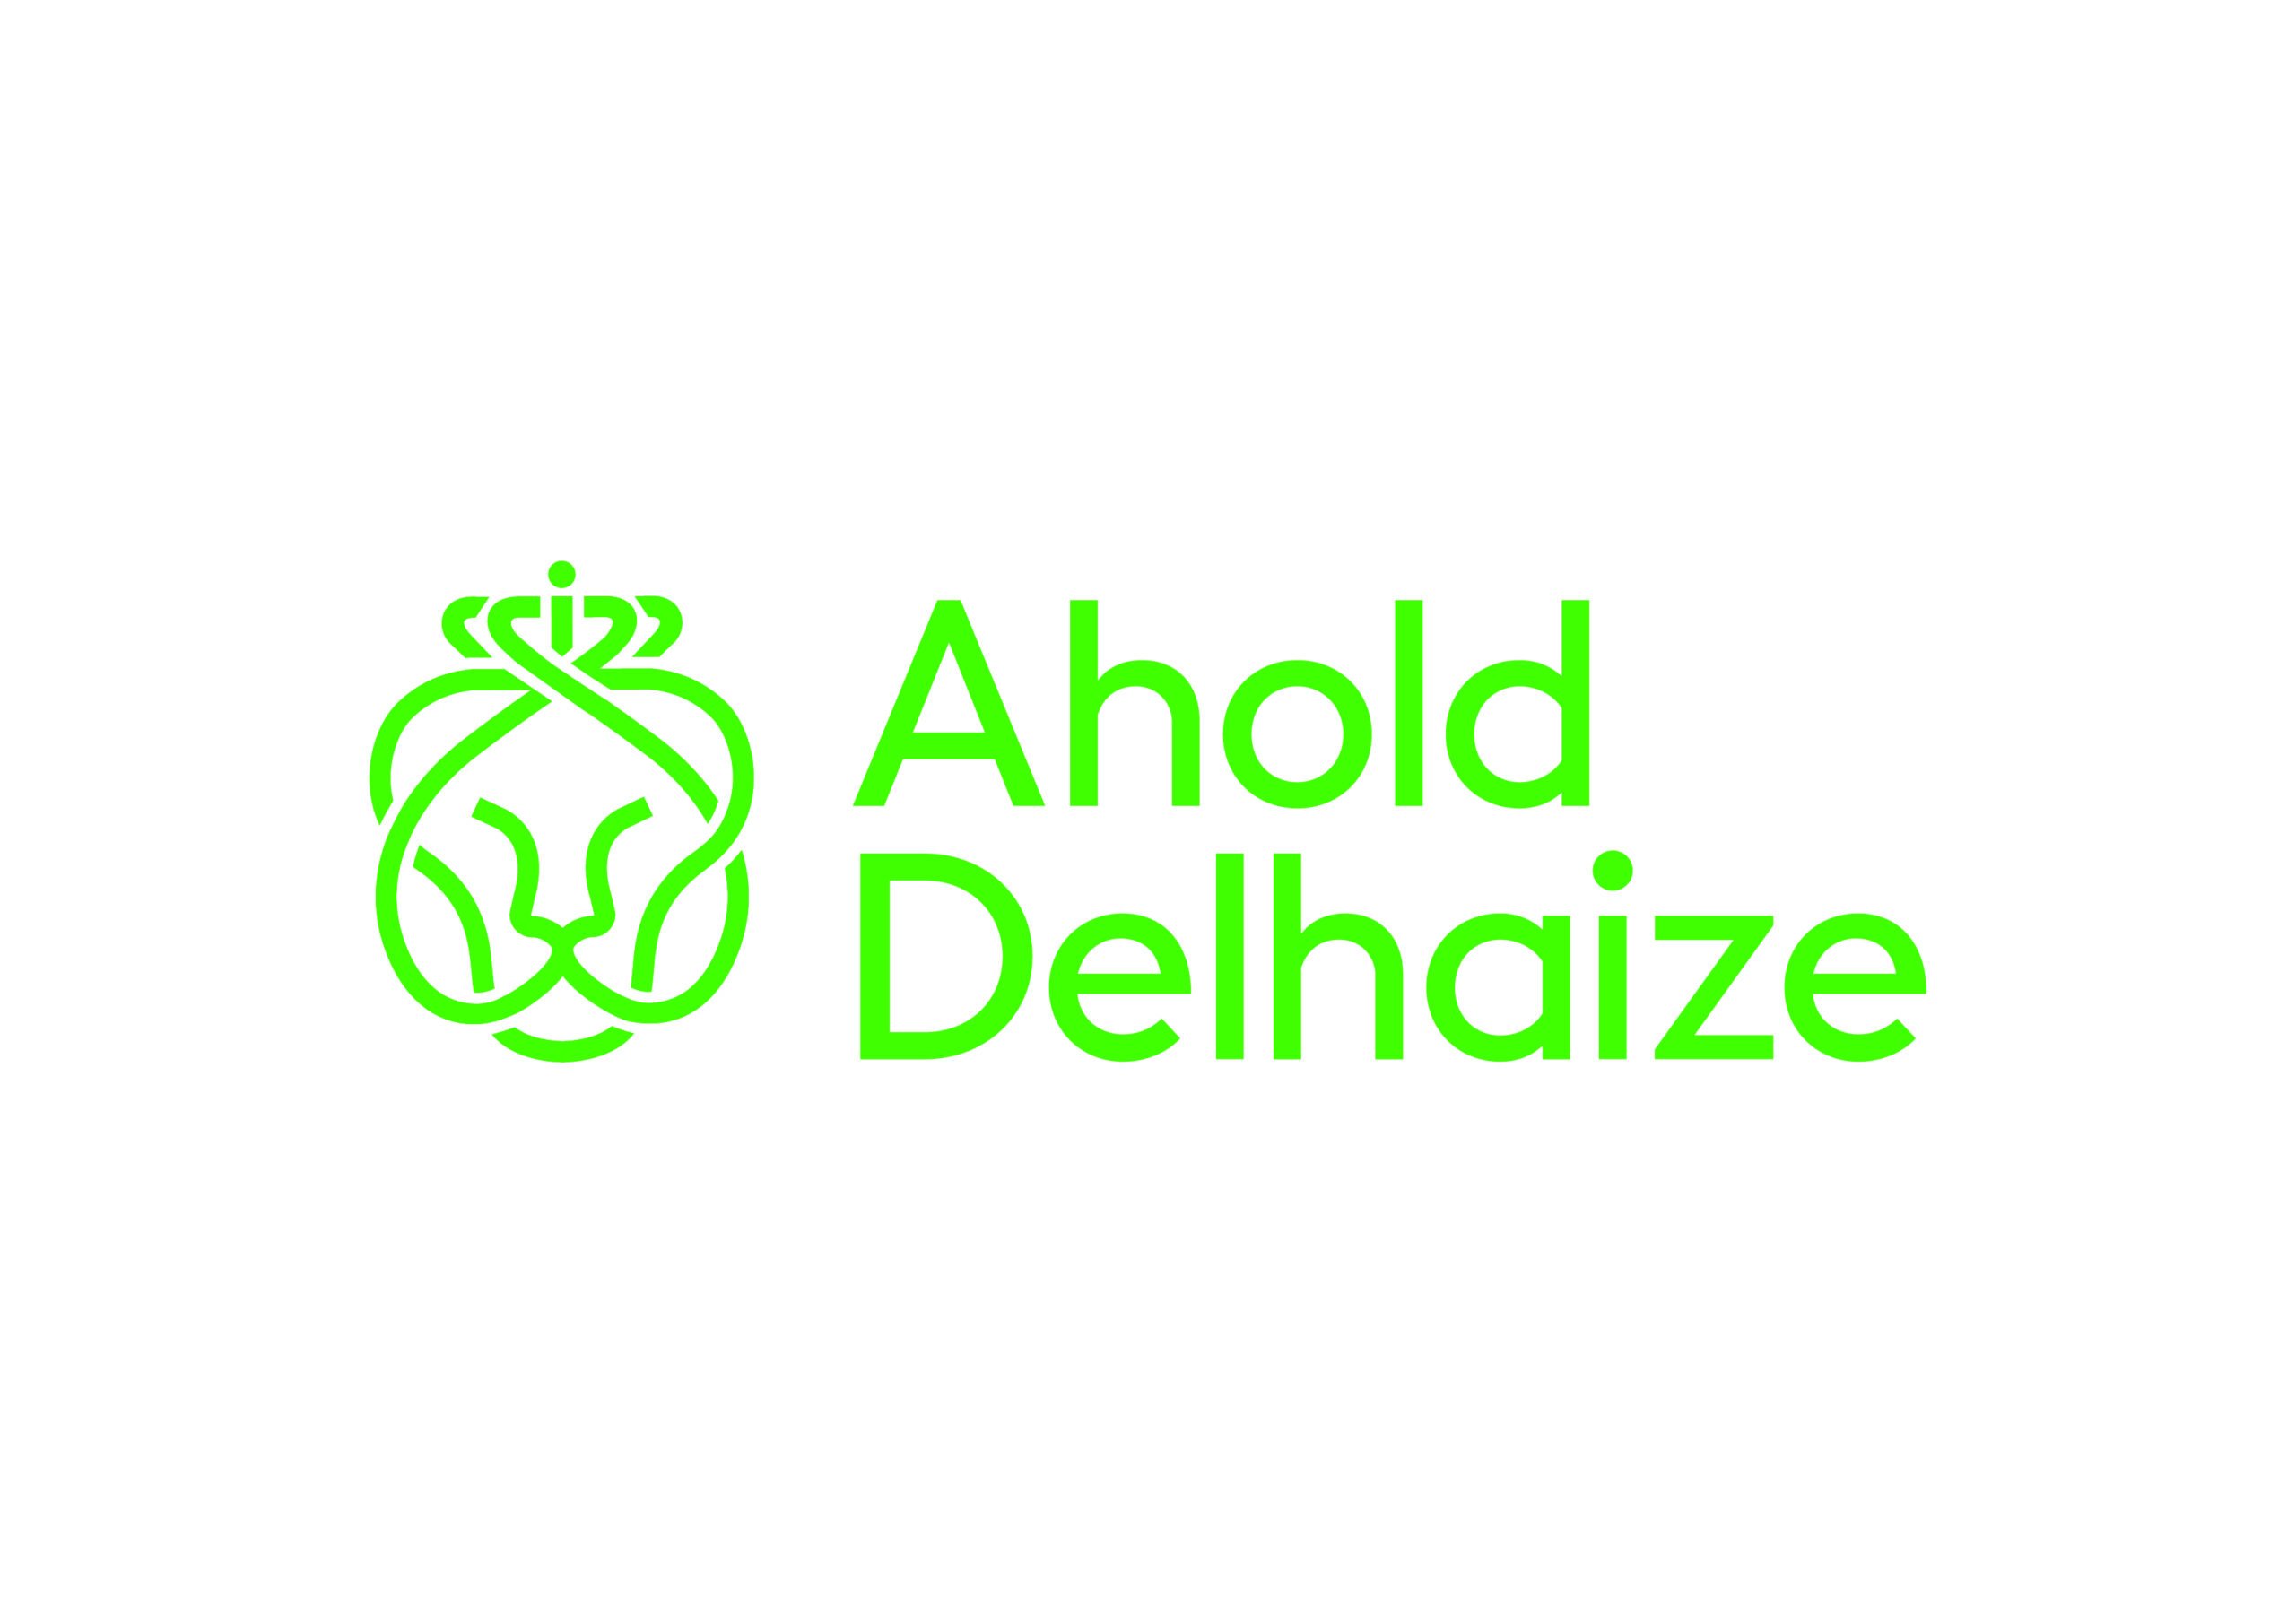 Ahold Delhaize (logo)